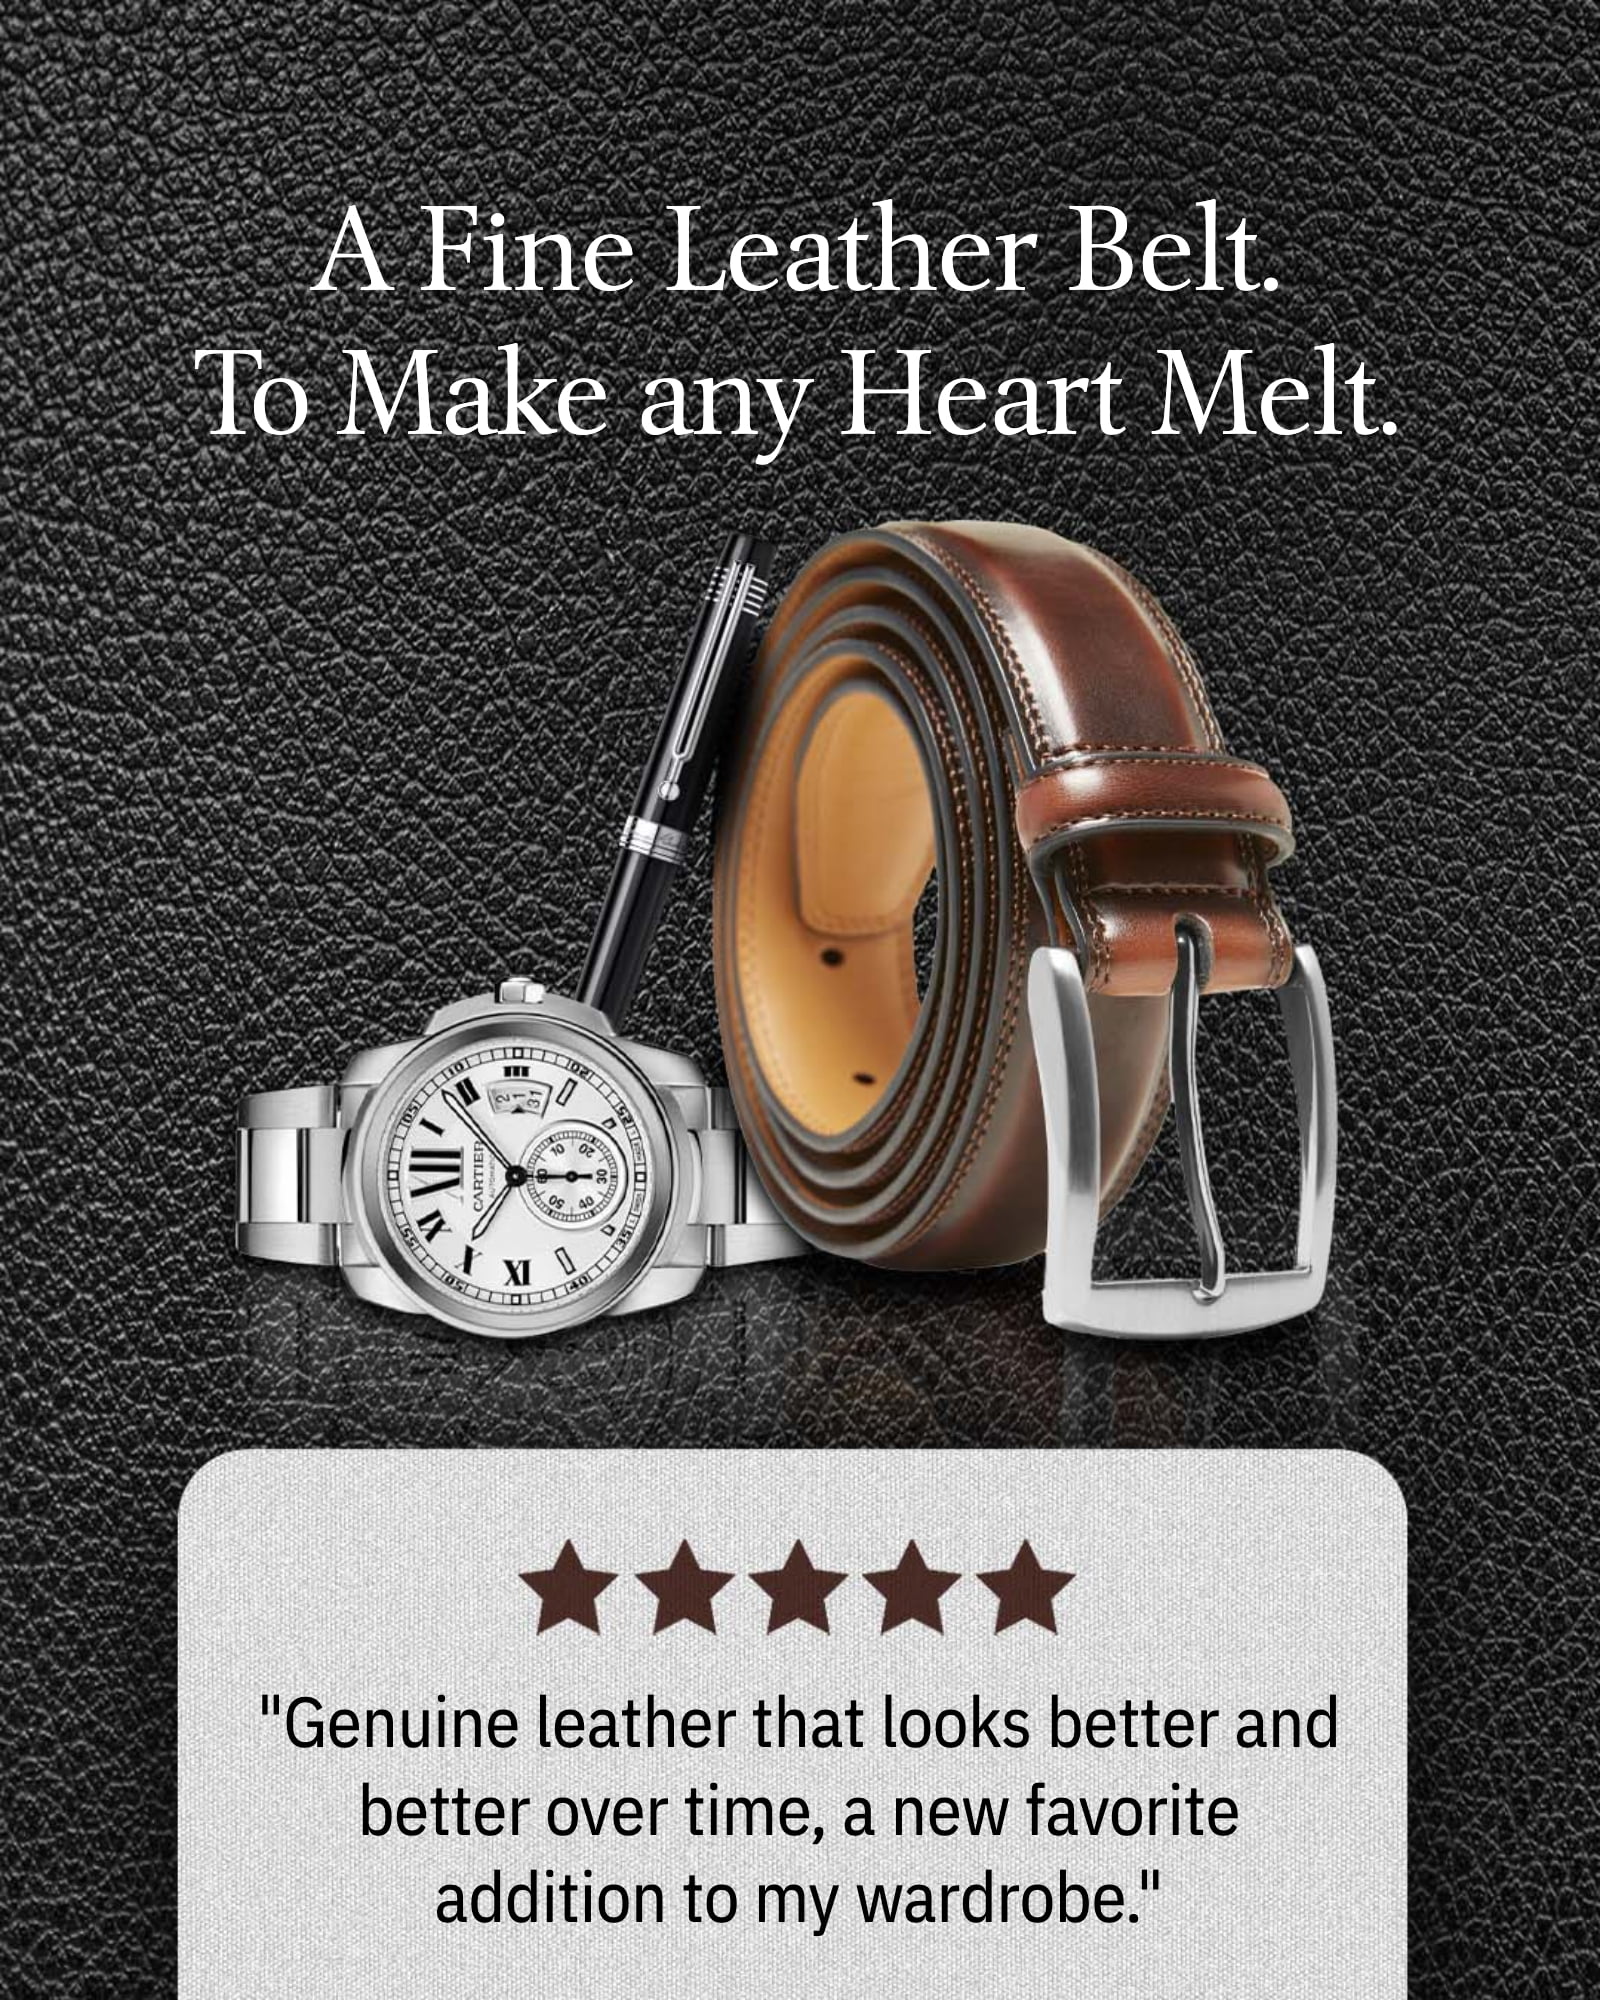 Lvelia 35mm Genuine Leather Dress Belts for Men-Mens Belt for Suits, Jeans,  Uniform with Automatic Buckle, Black 